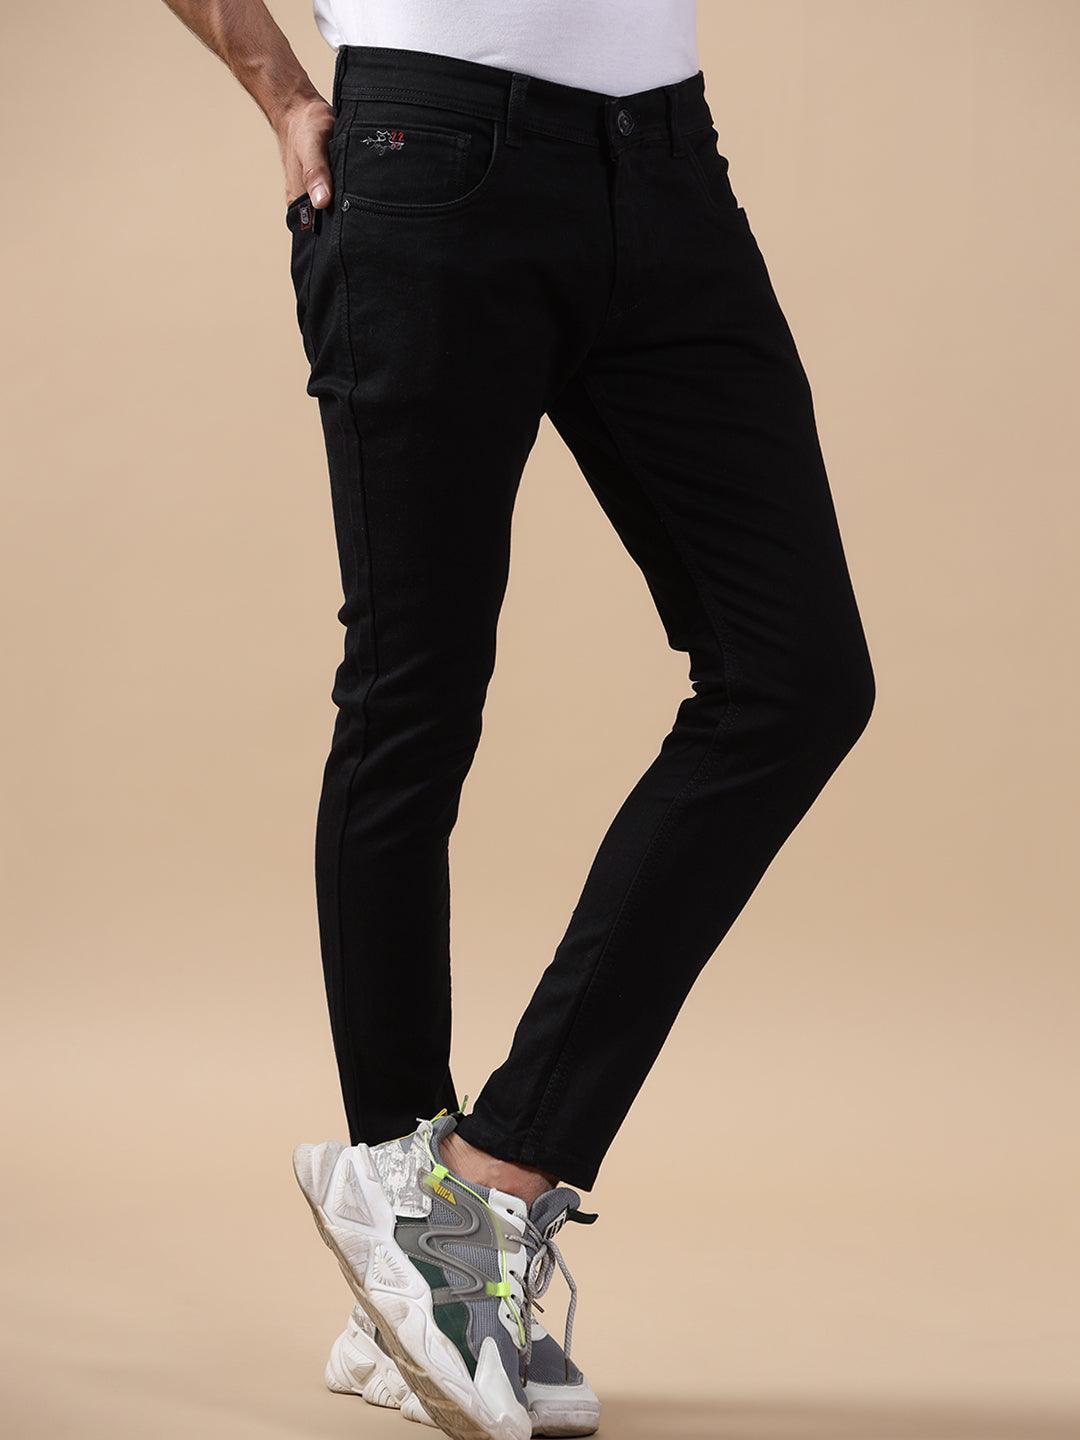 Black Denim Ankle Length Stretchable Men's Jeans